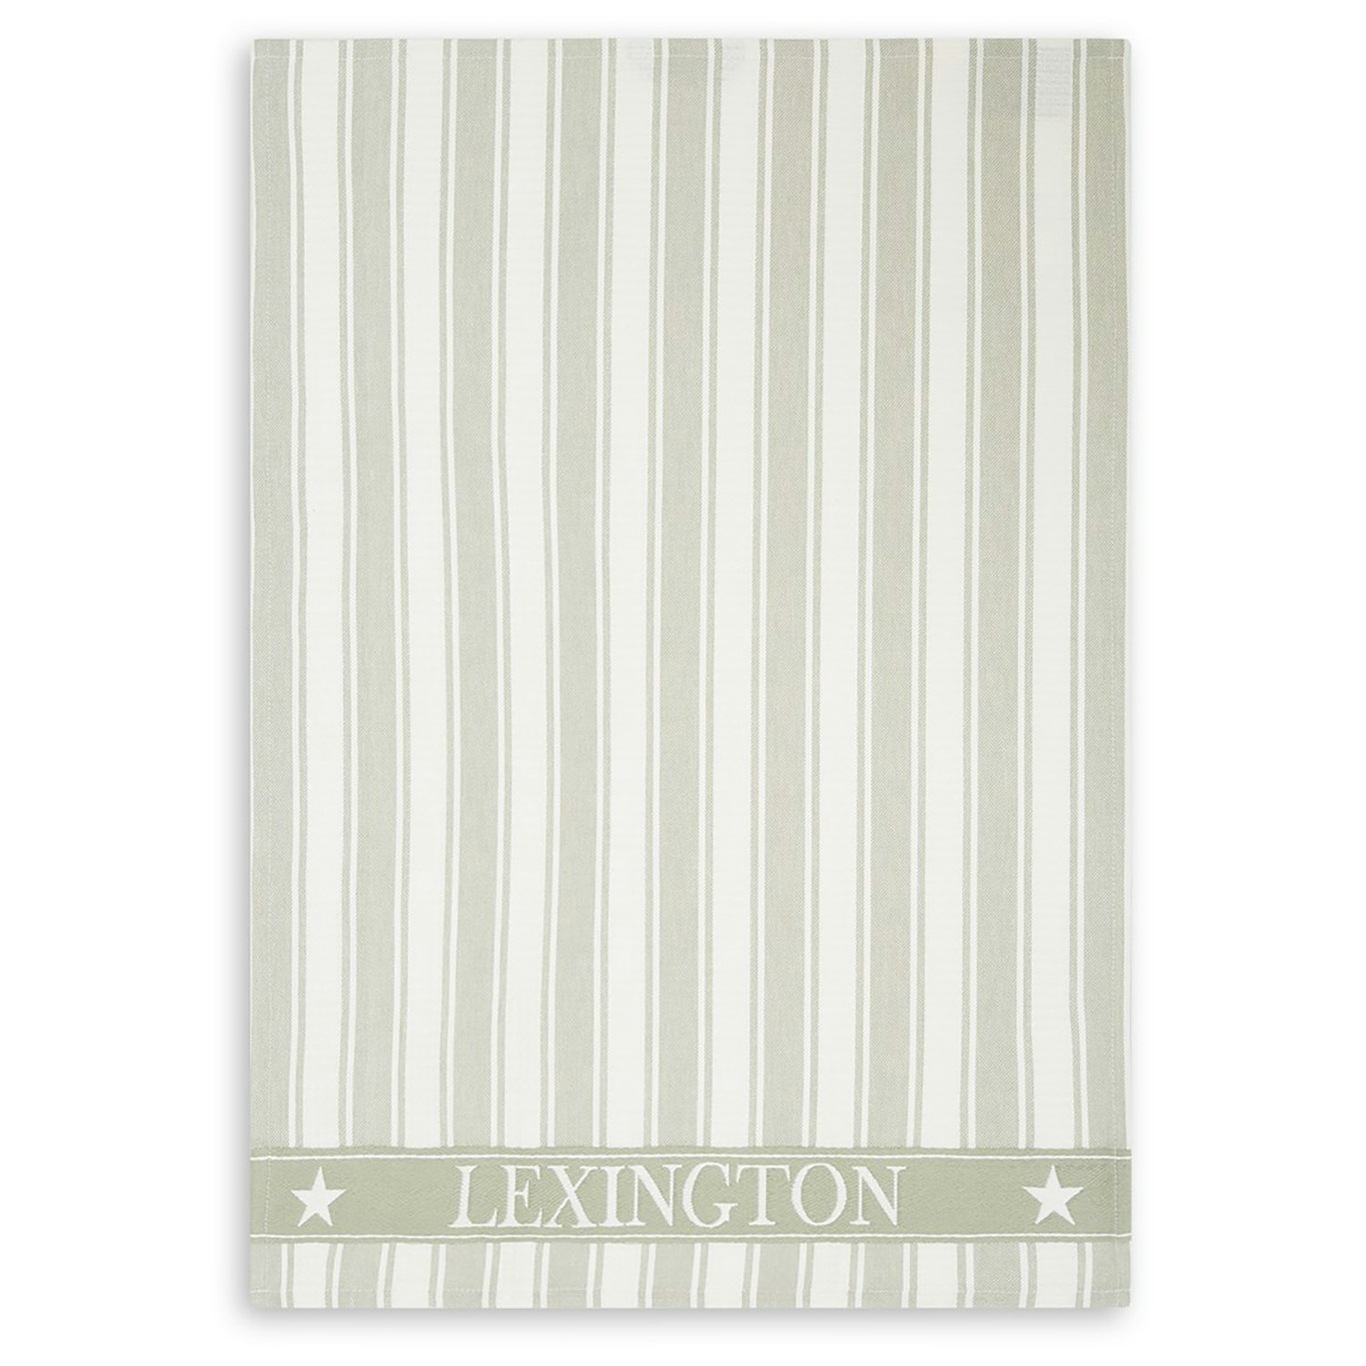 https://royaldesign.com/image/11/lexington-icons-cotton-twill-waffle-striped-kitchen-towel-sage-green-white-0?w=800&quality=80